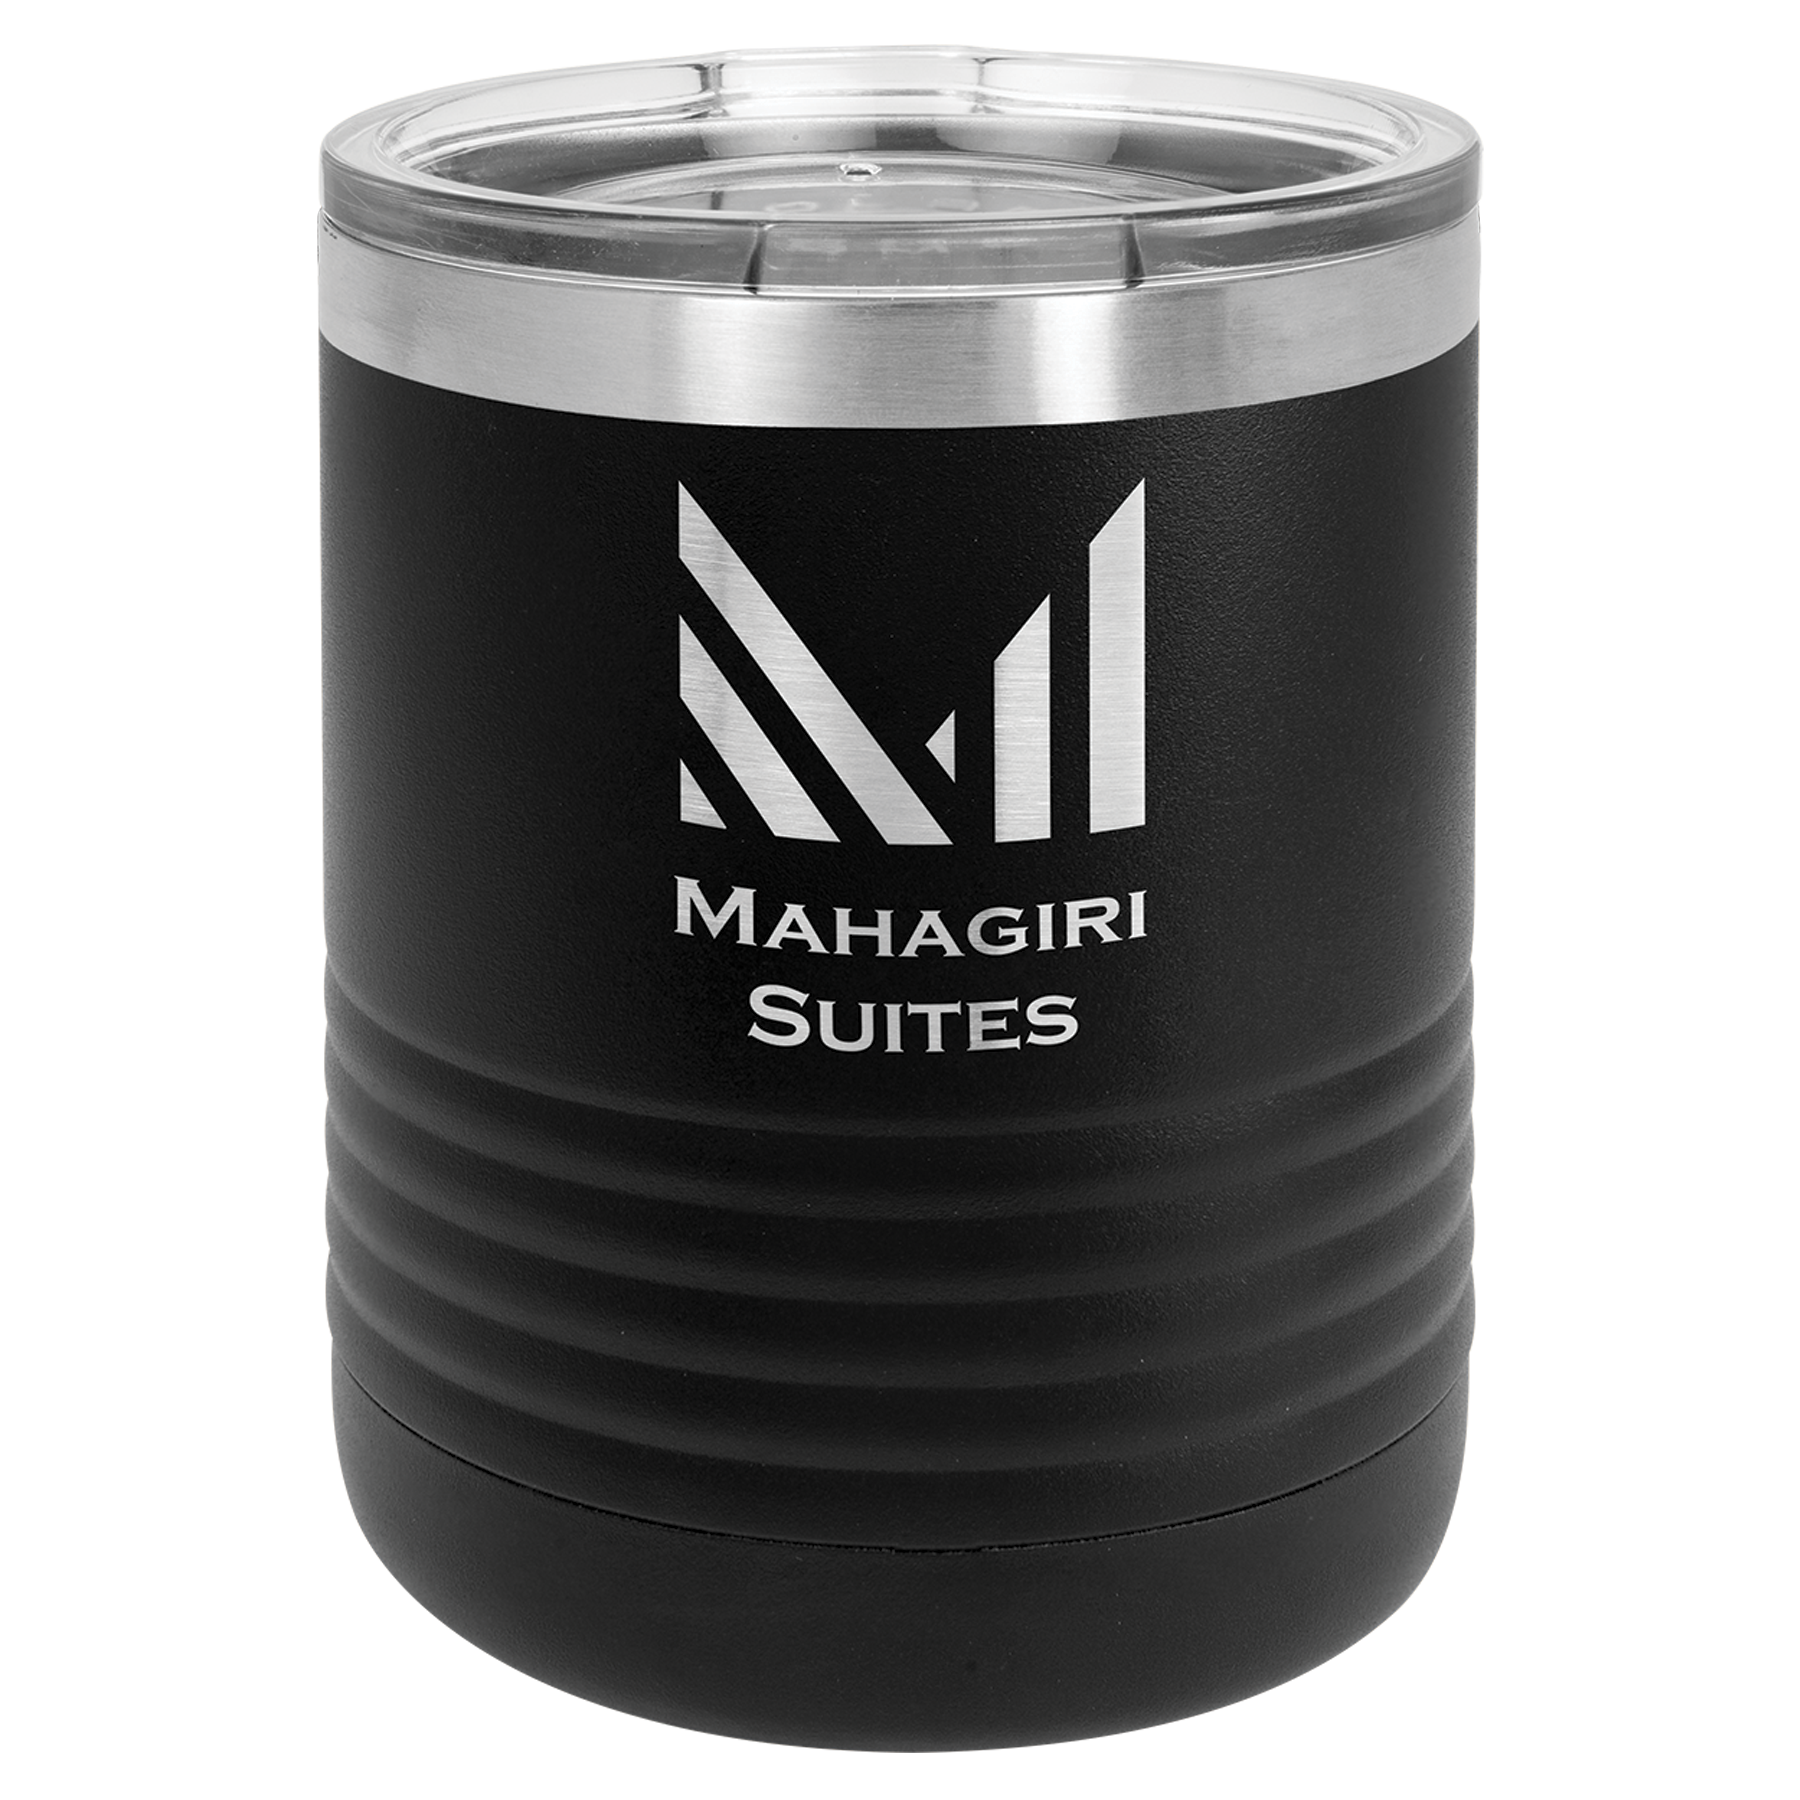 Buy InstaCuppa Vacuum Insulated Travel Mug Online | Order Travel Mug